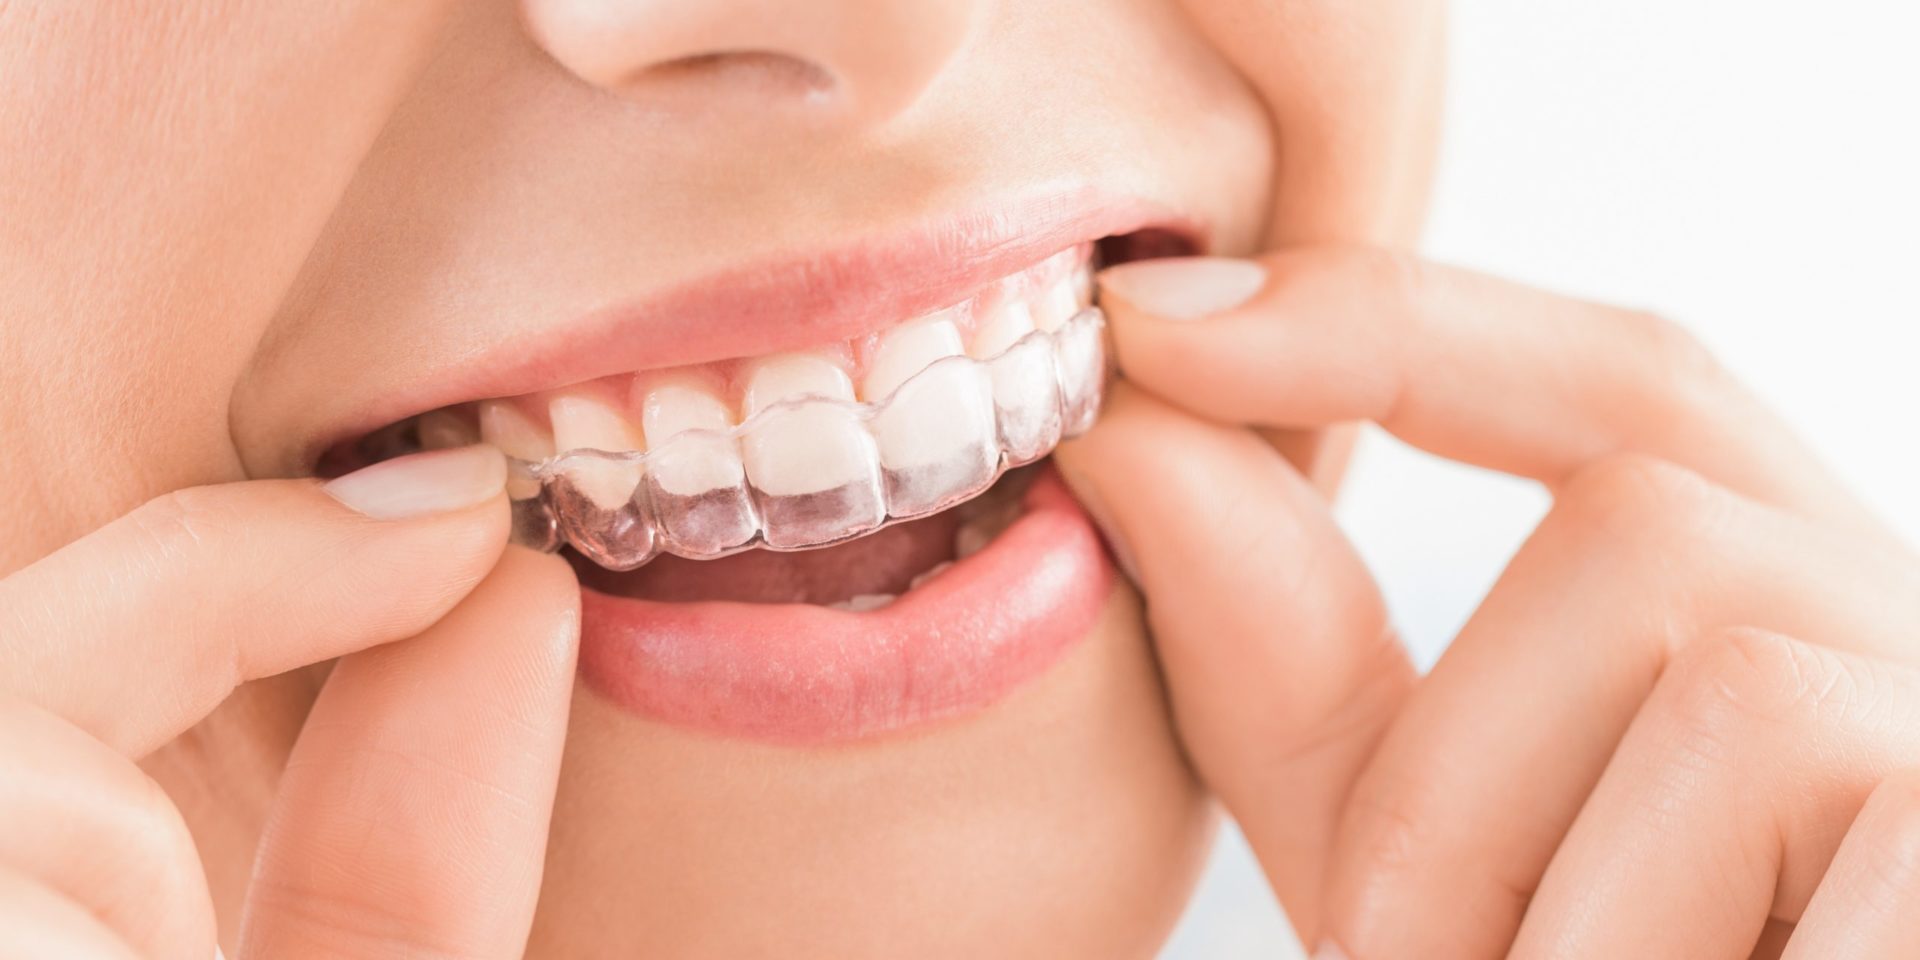 Invisalign : Orthodontie et appareil dentaire invisible - GUIDE - Dentego